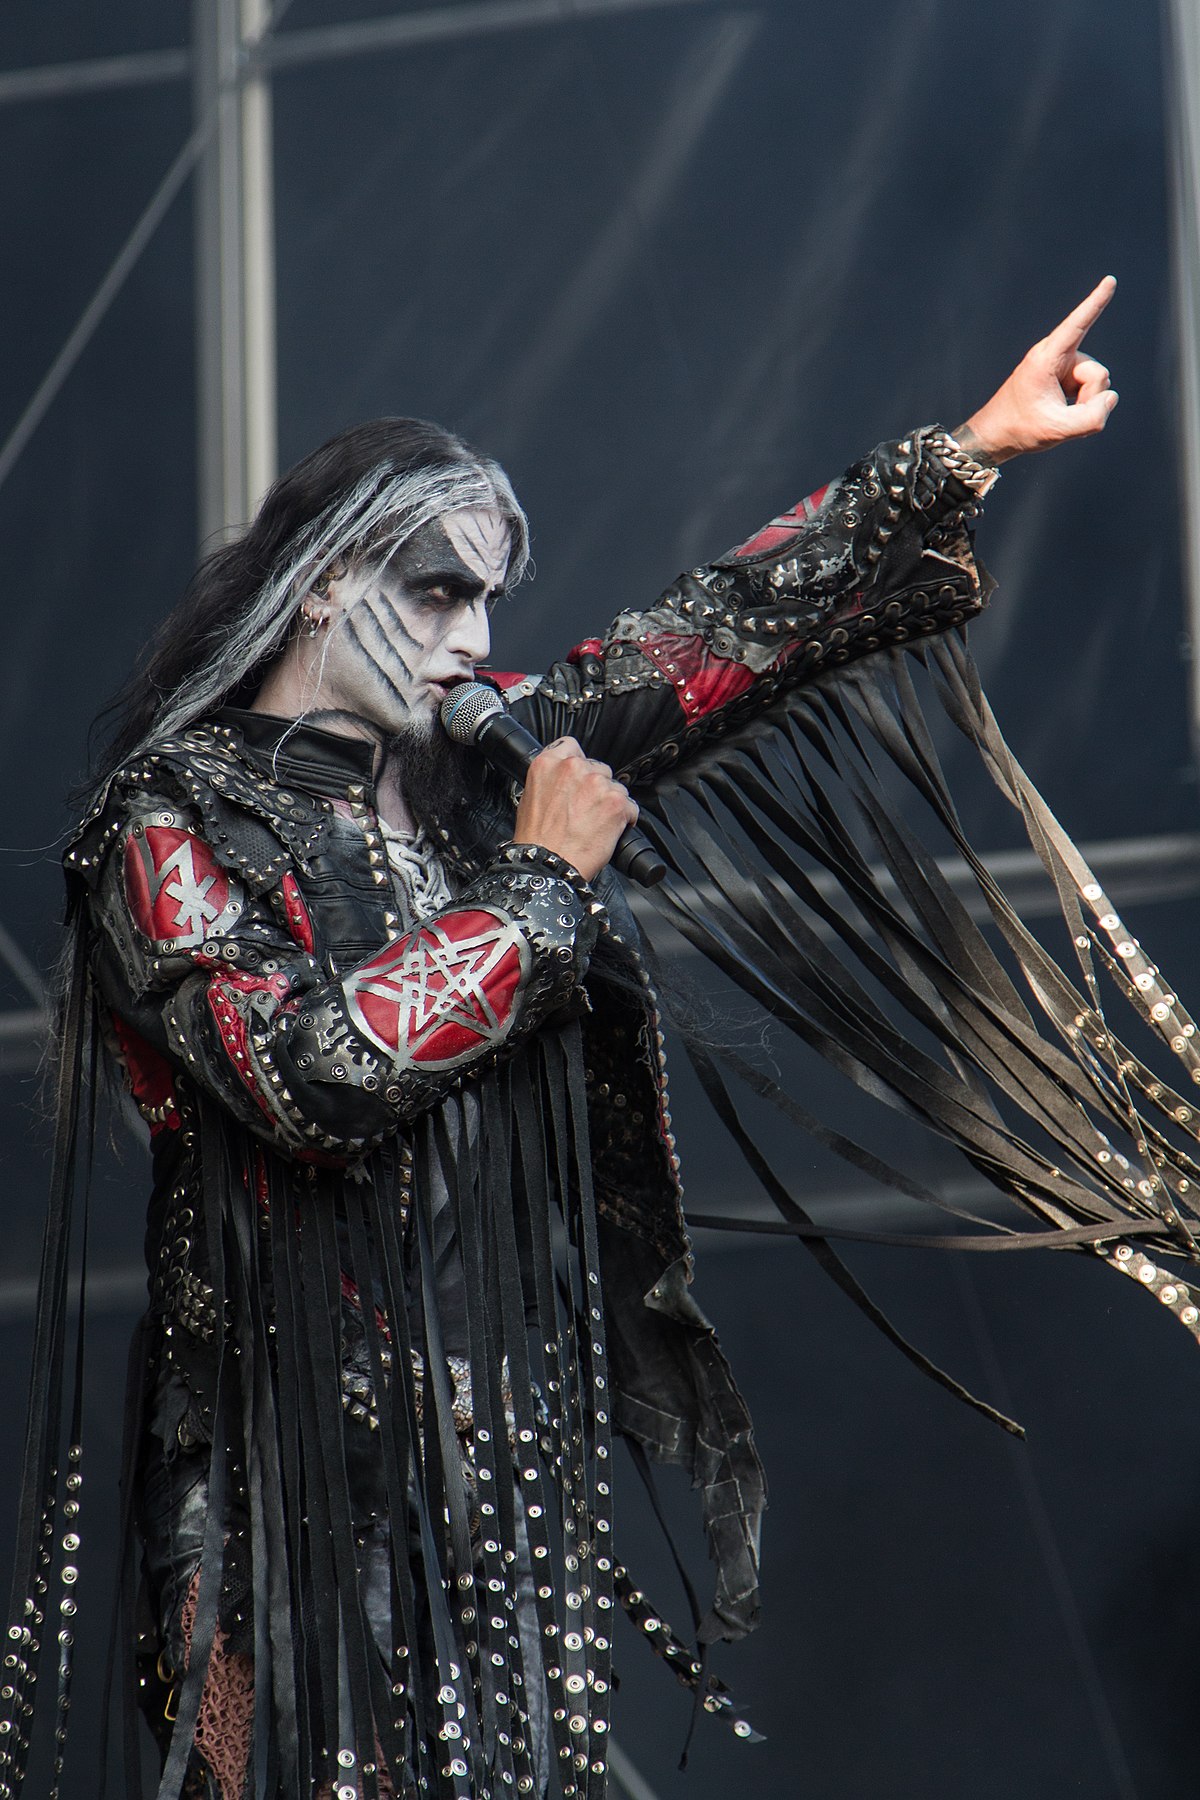 File:20140802-273-See-Rock Festival 2014-Dimmu Borgir-Stian Tomt Shagrath  Thoresen.jpg - Wikimedia Commons